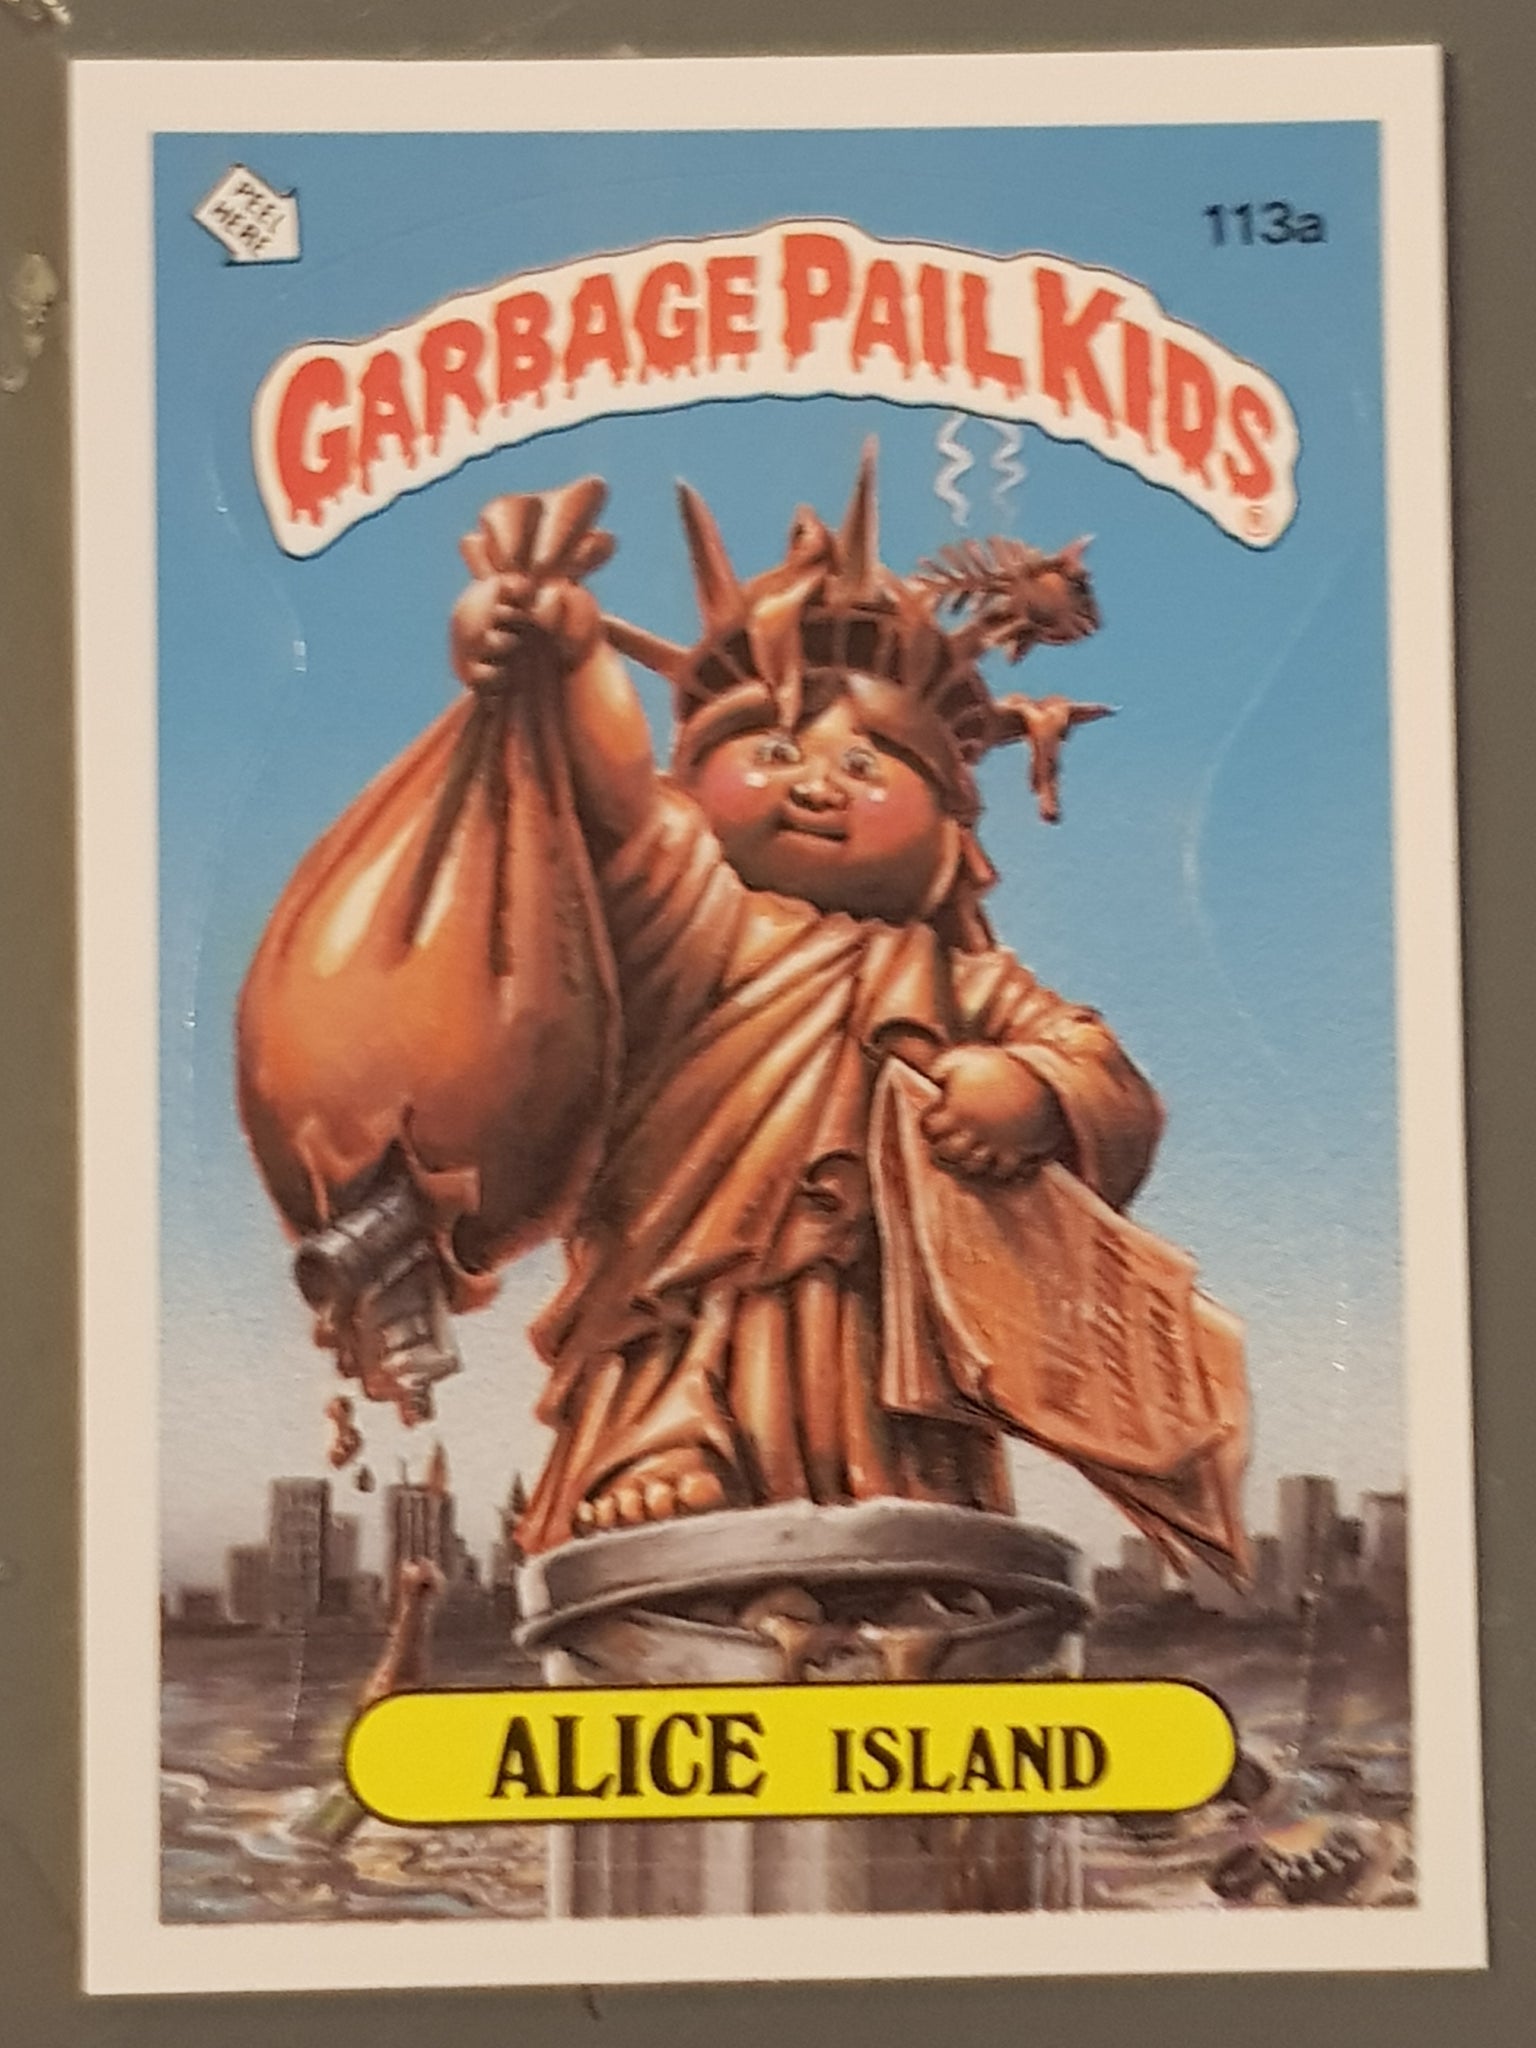 Garbage Pail Kids Original Series 3 #113a - Alice Island Sticker